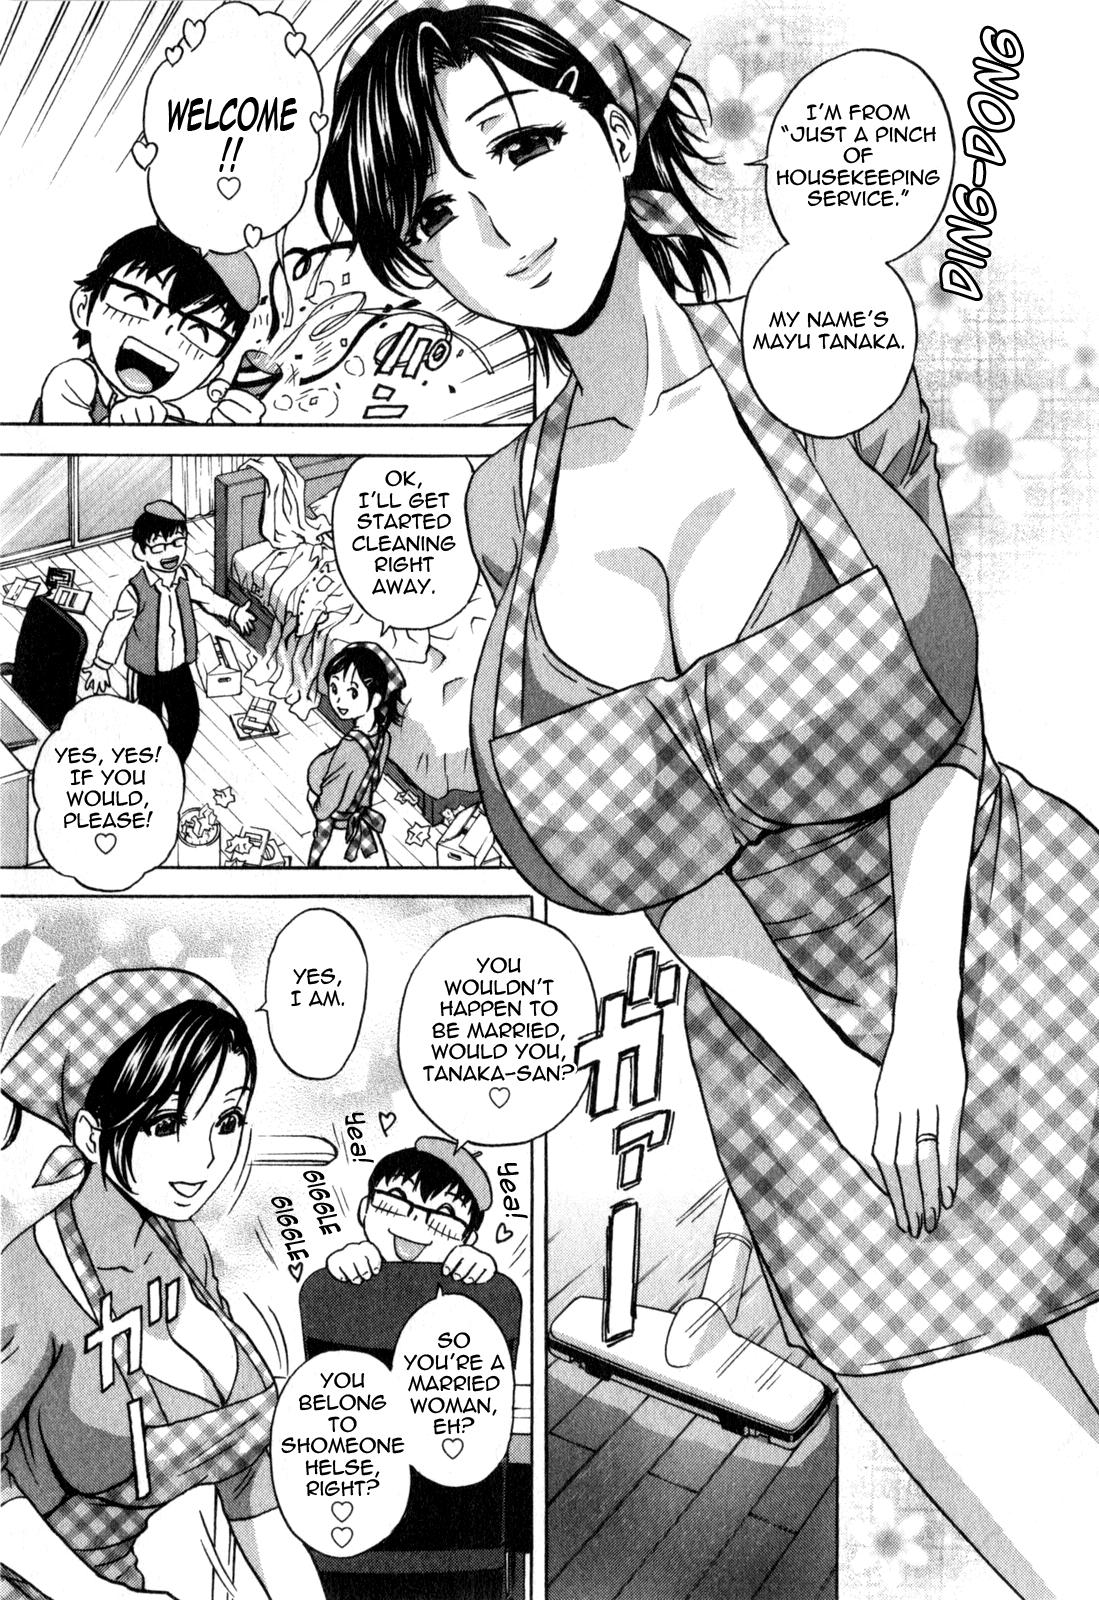 [Hidemaru] Life with Married Women Just Like a Manga 3 - Ch. 1-7 [English] {Tadanohito} 73